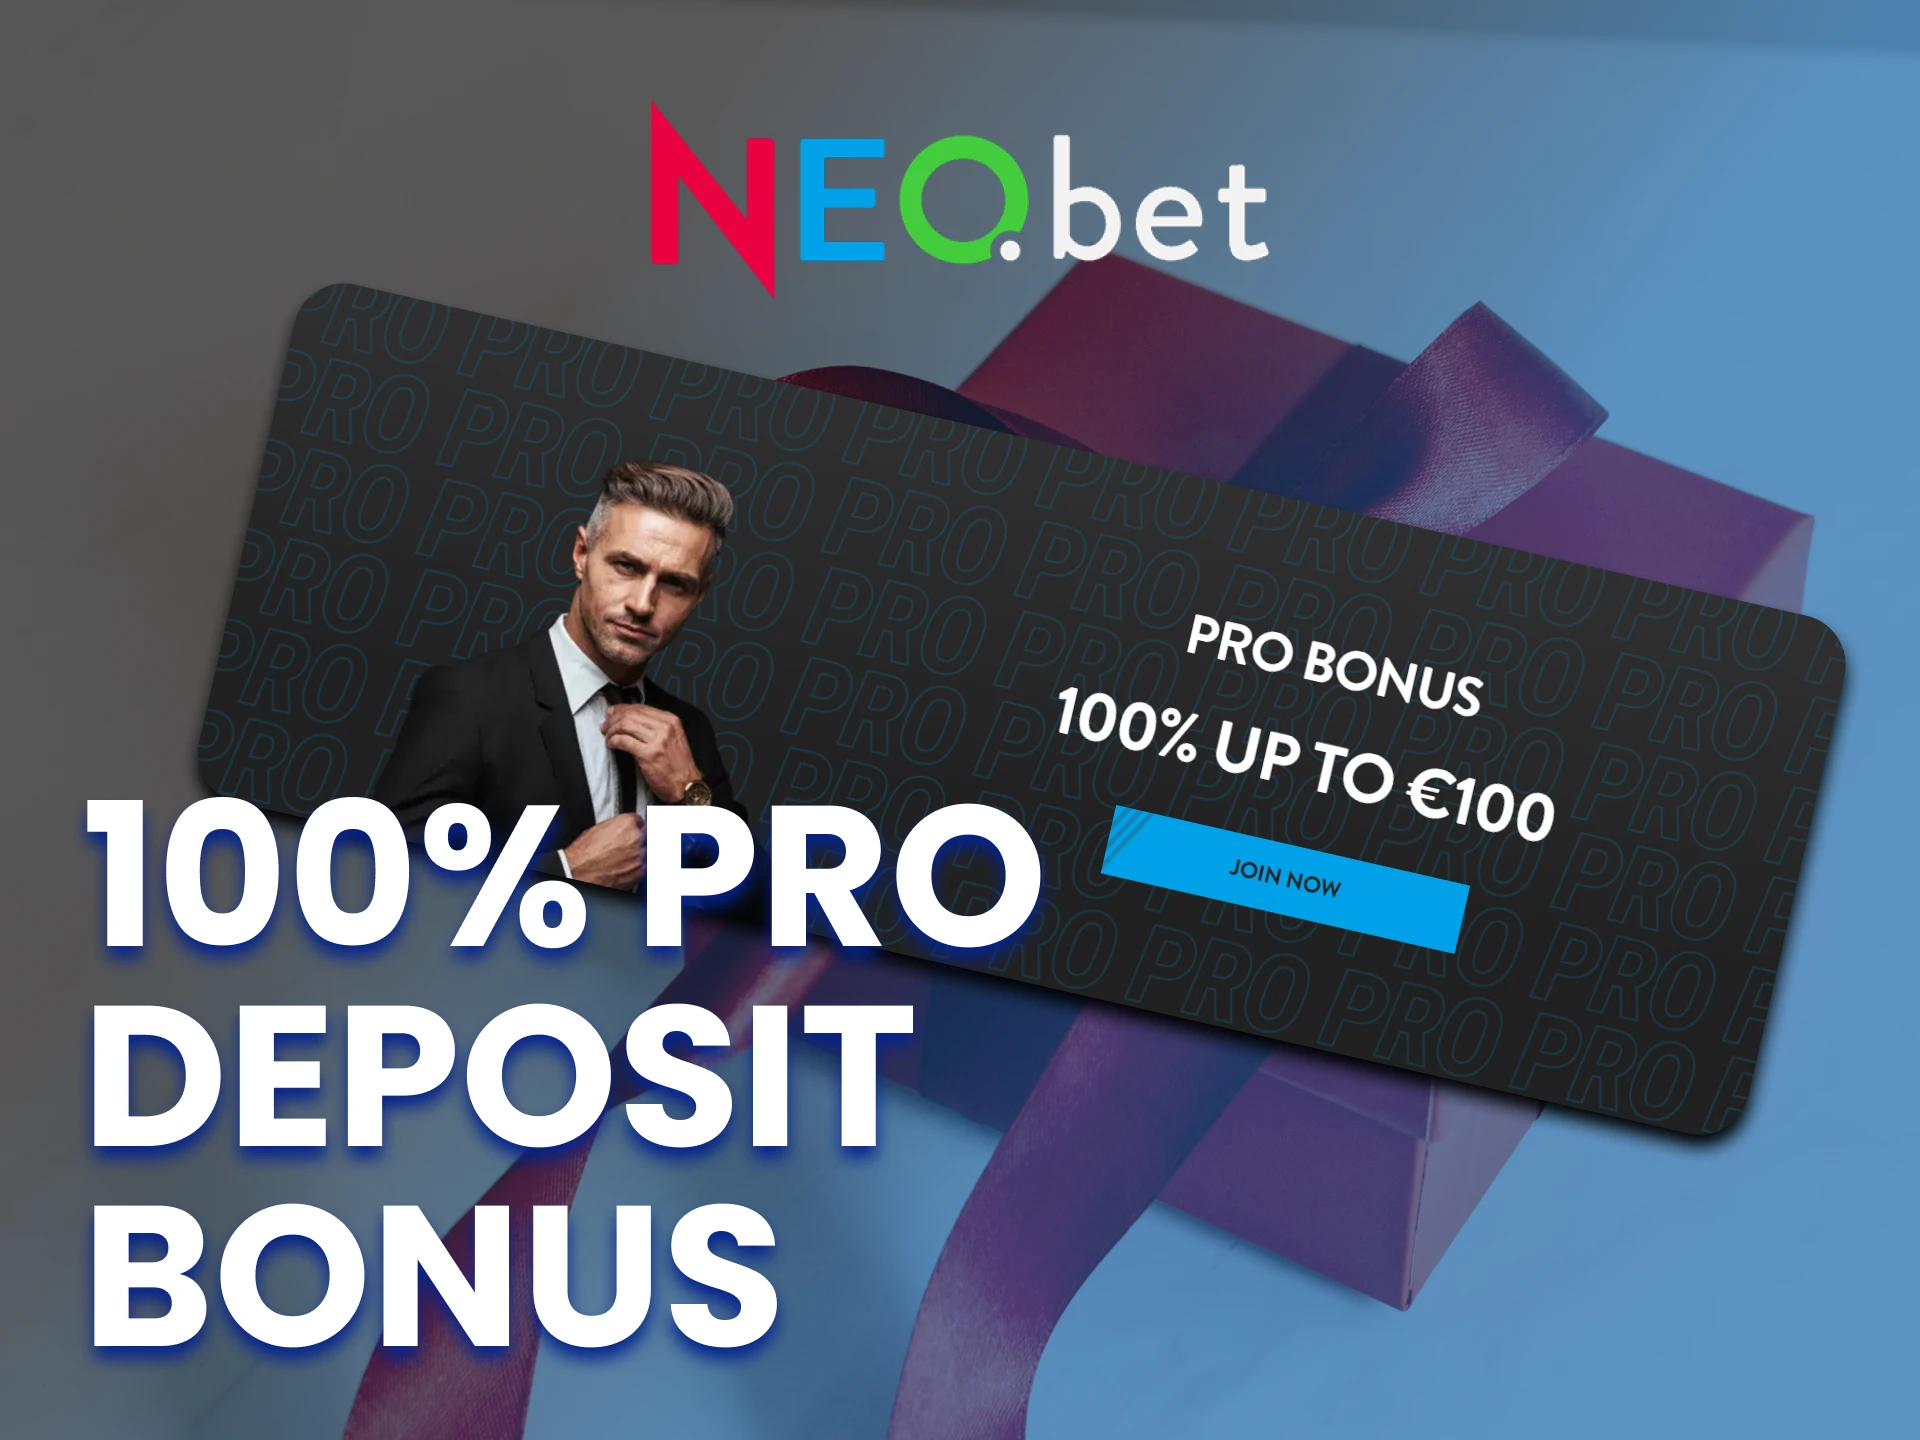 NEO.bet app gives PRO bonus on your deposit.